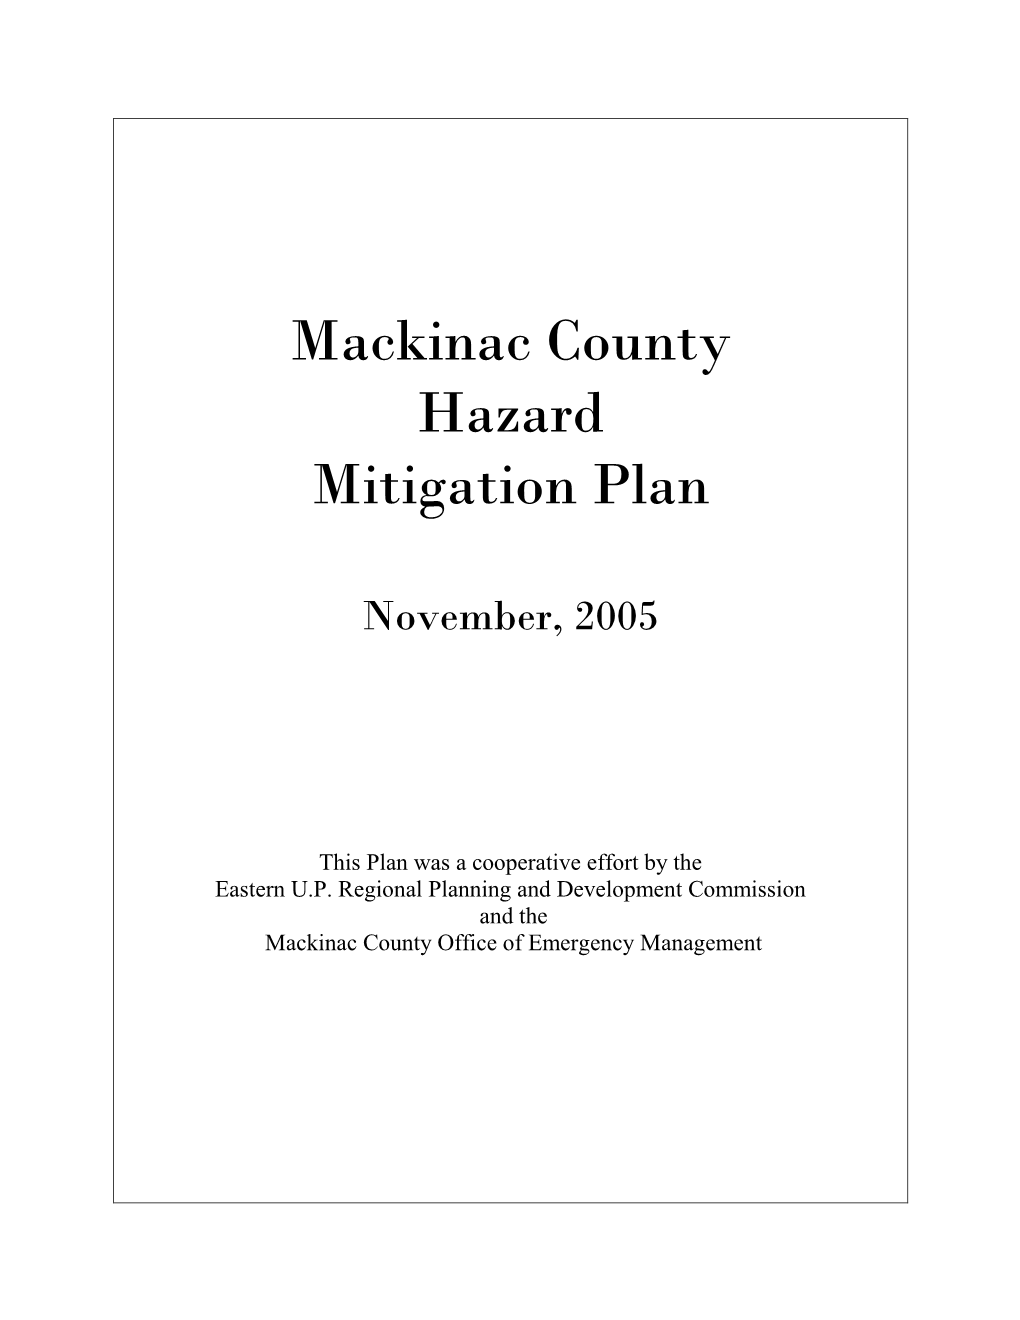 2005 Mackinac County Hazard Mitigation Plan